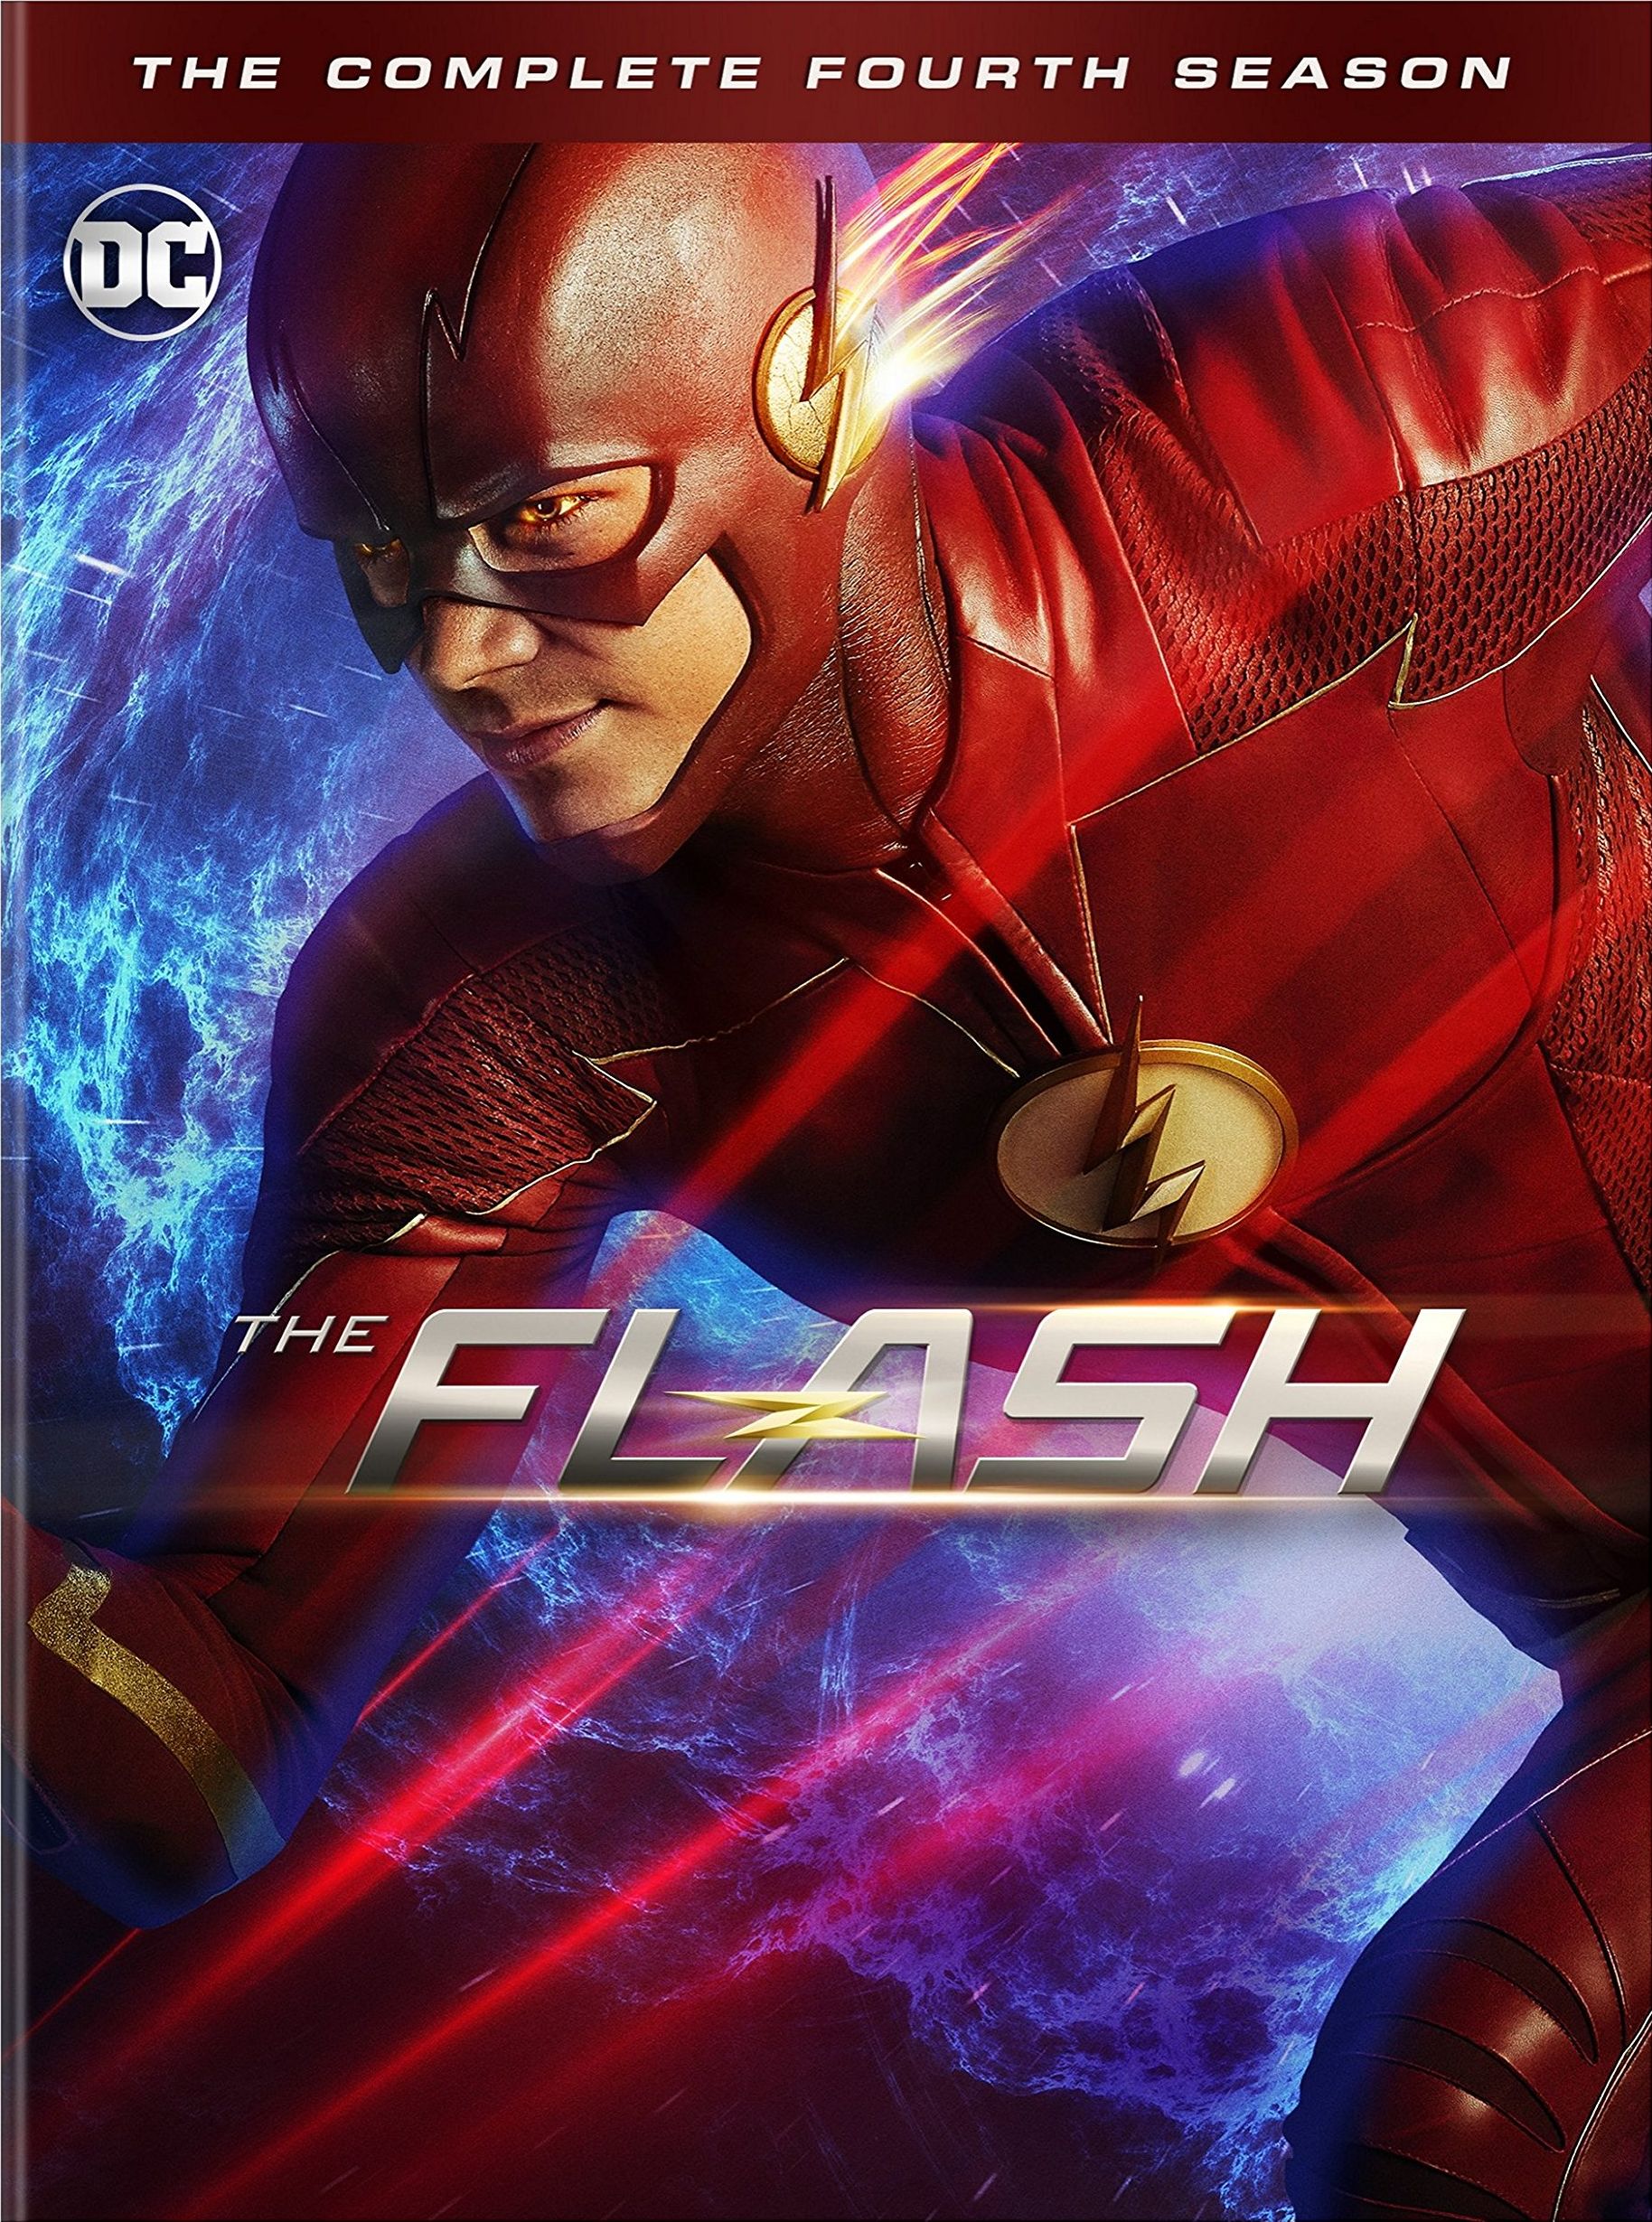 The Flash Season 5 Release Date